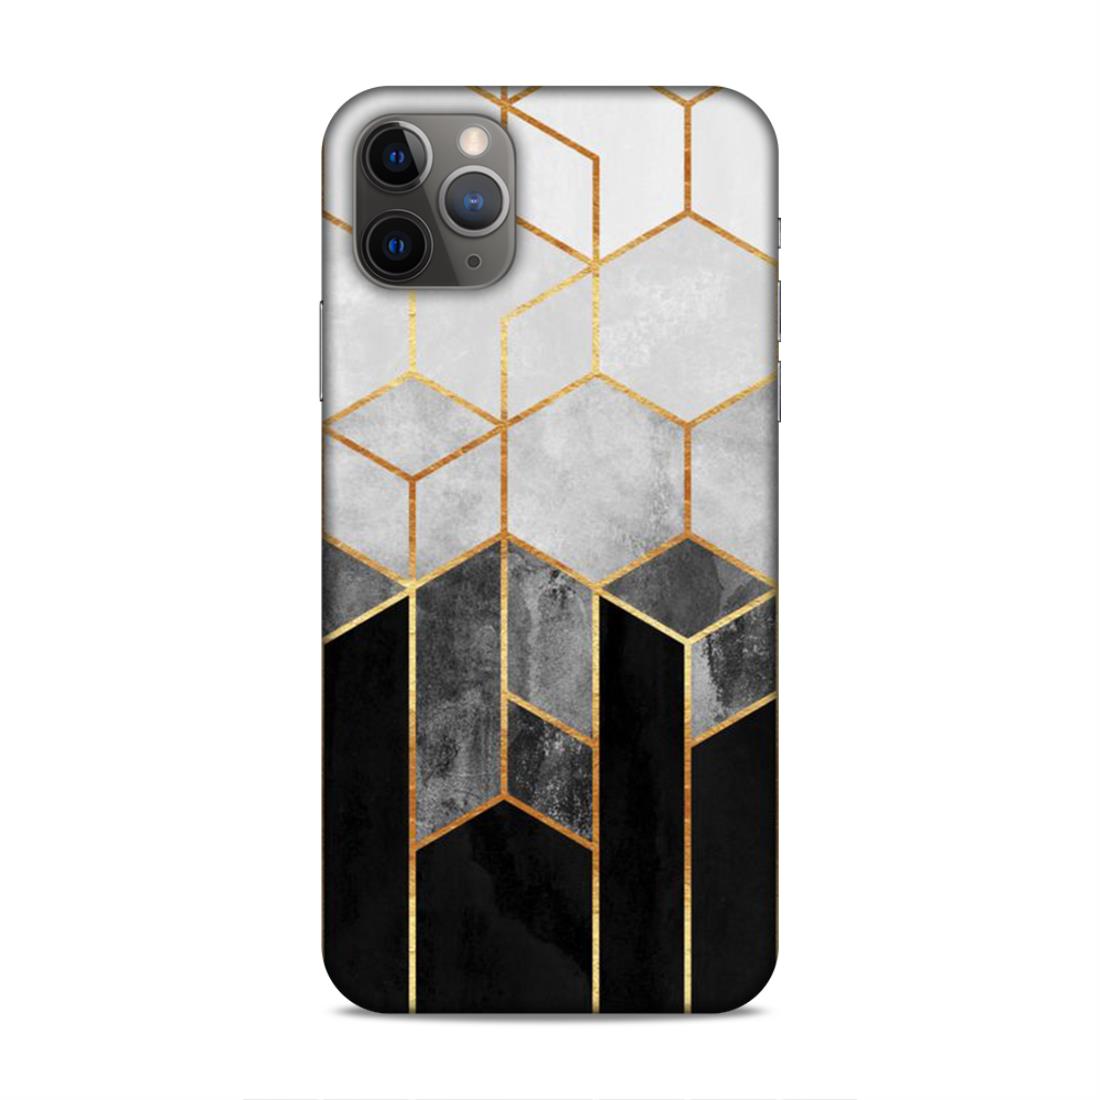 Hexagonal White Black Pattern Hard Back Case For Apple iPhone 11 Pro Max